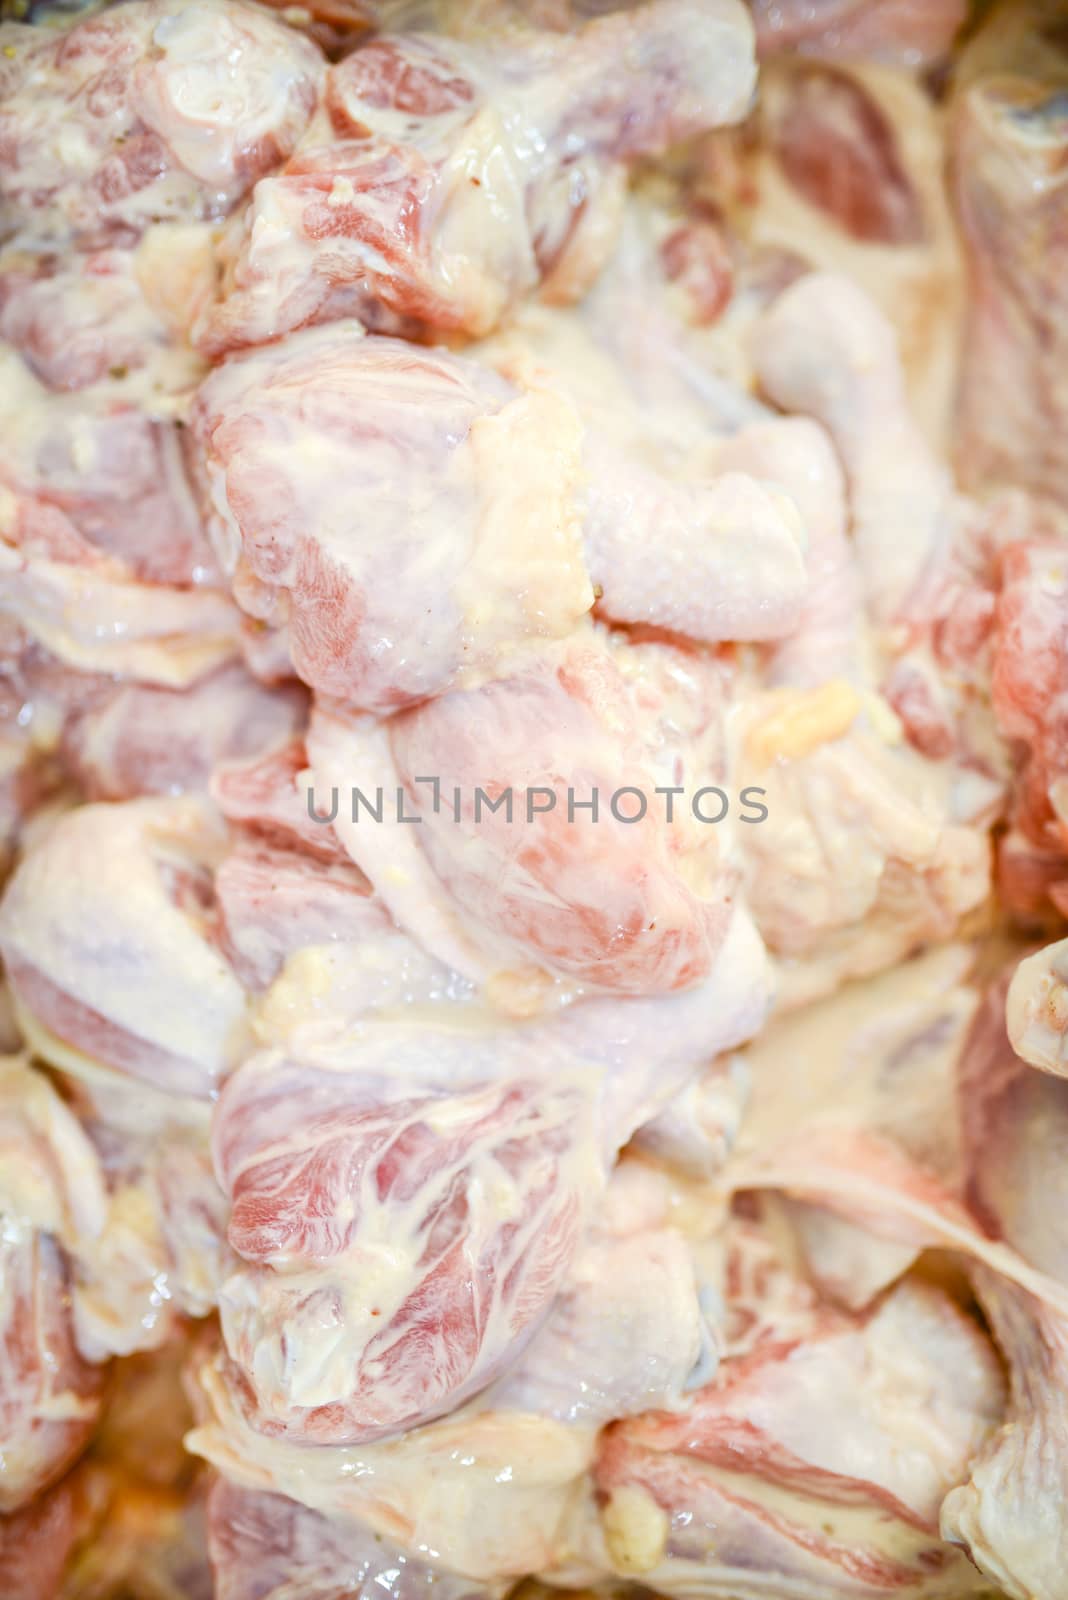 prepare raw chicken legs by antpkr